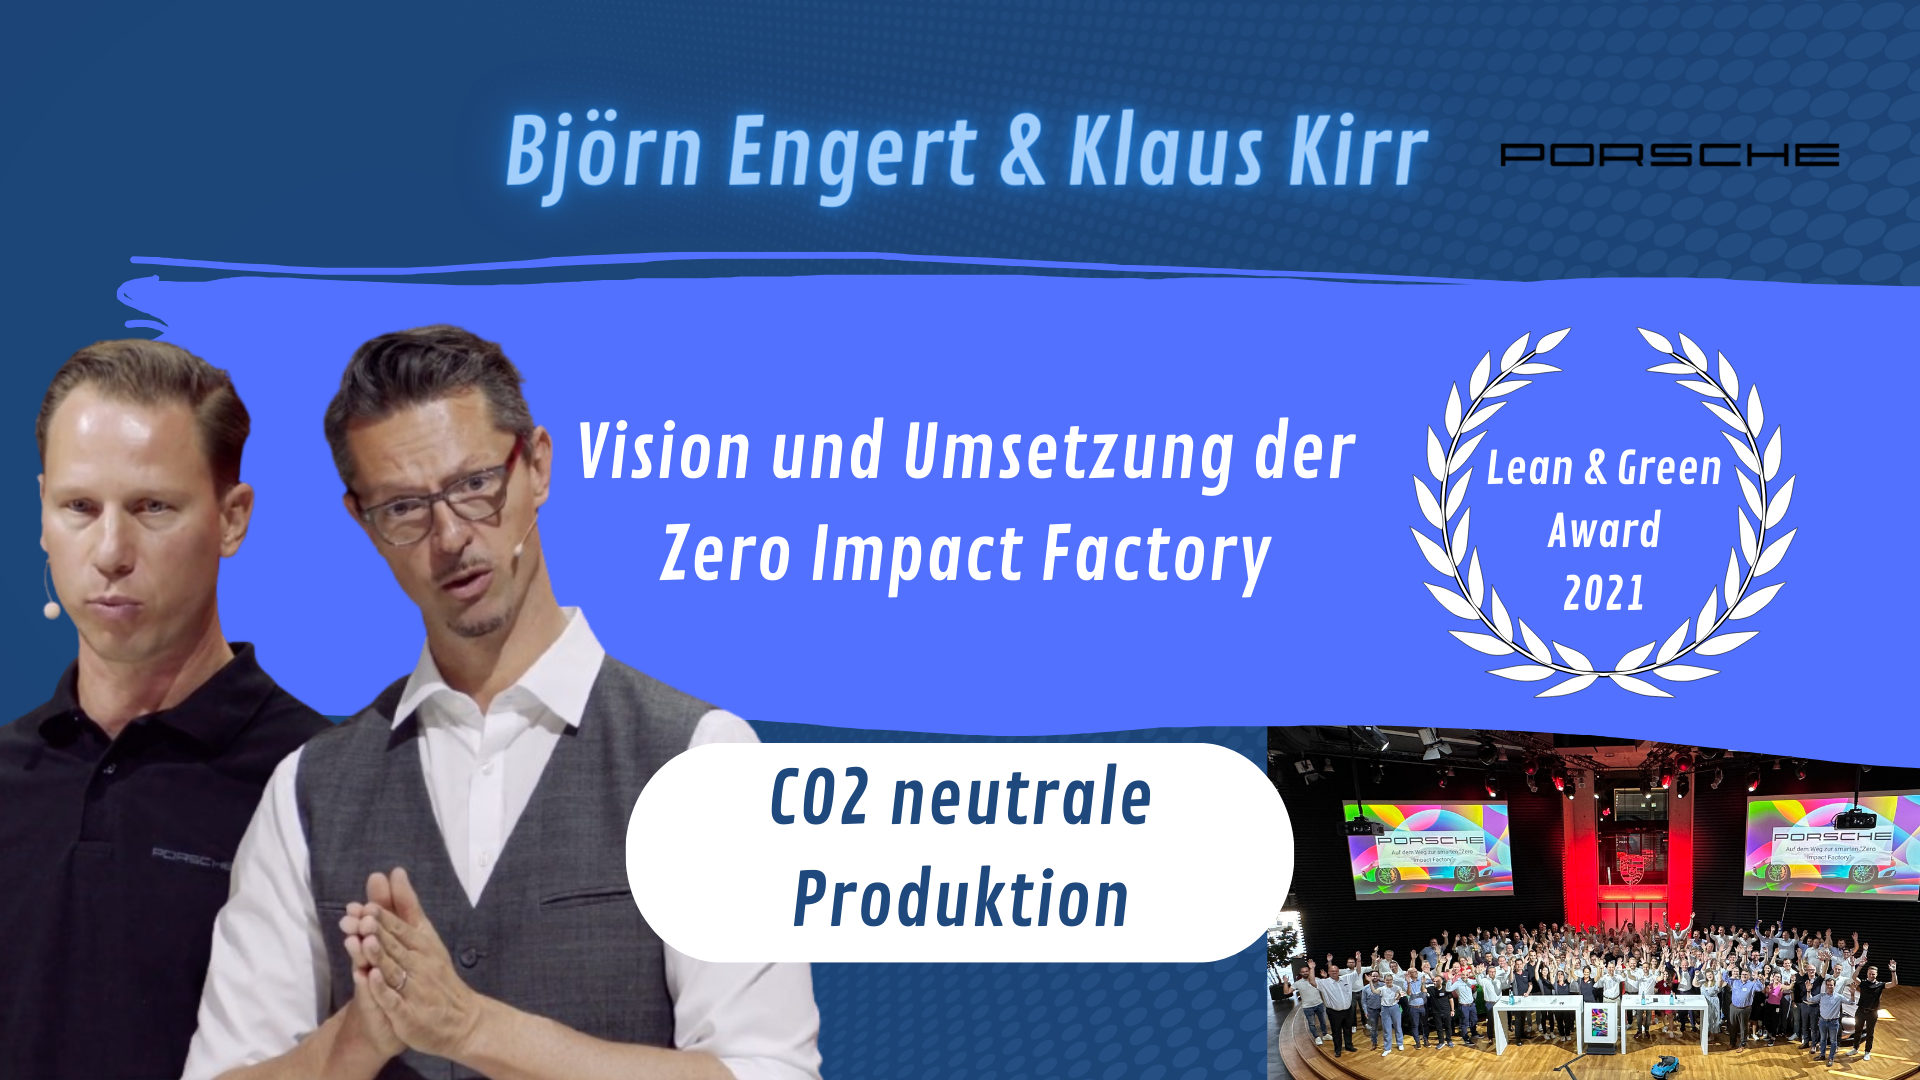 GREEN - CO2 neutrale Produktion mit Björn Engert & Klaus Kirr